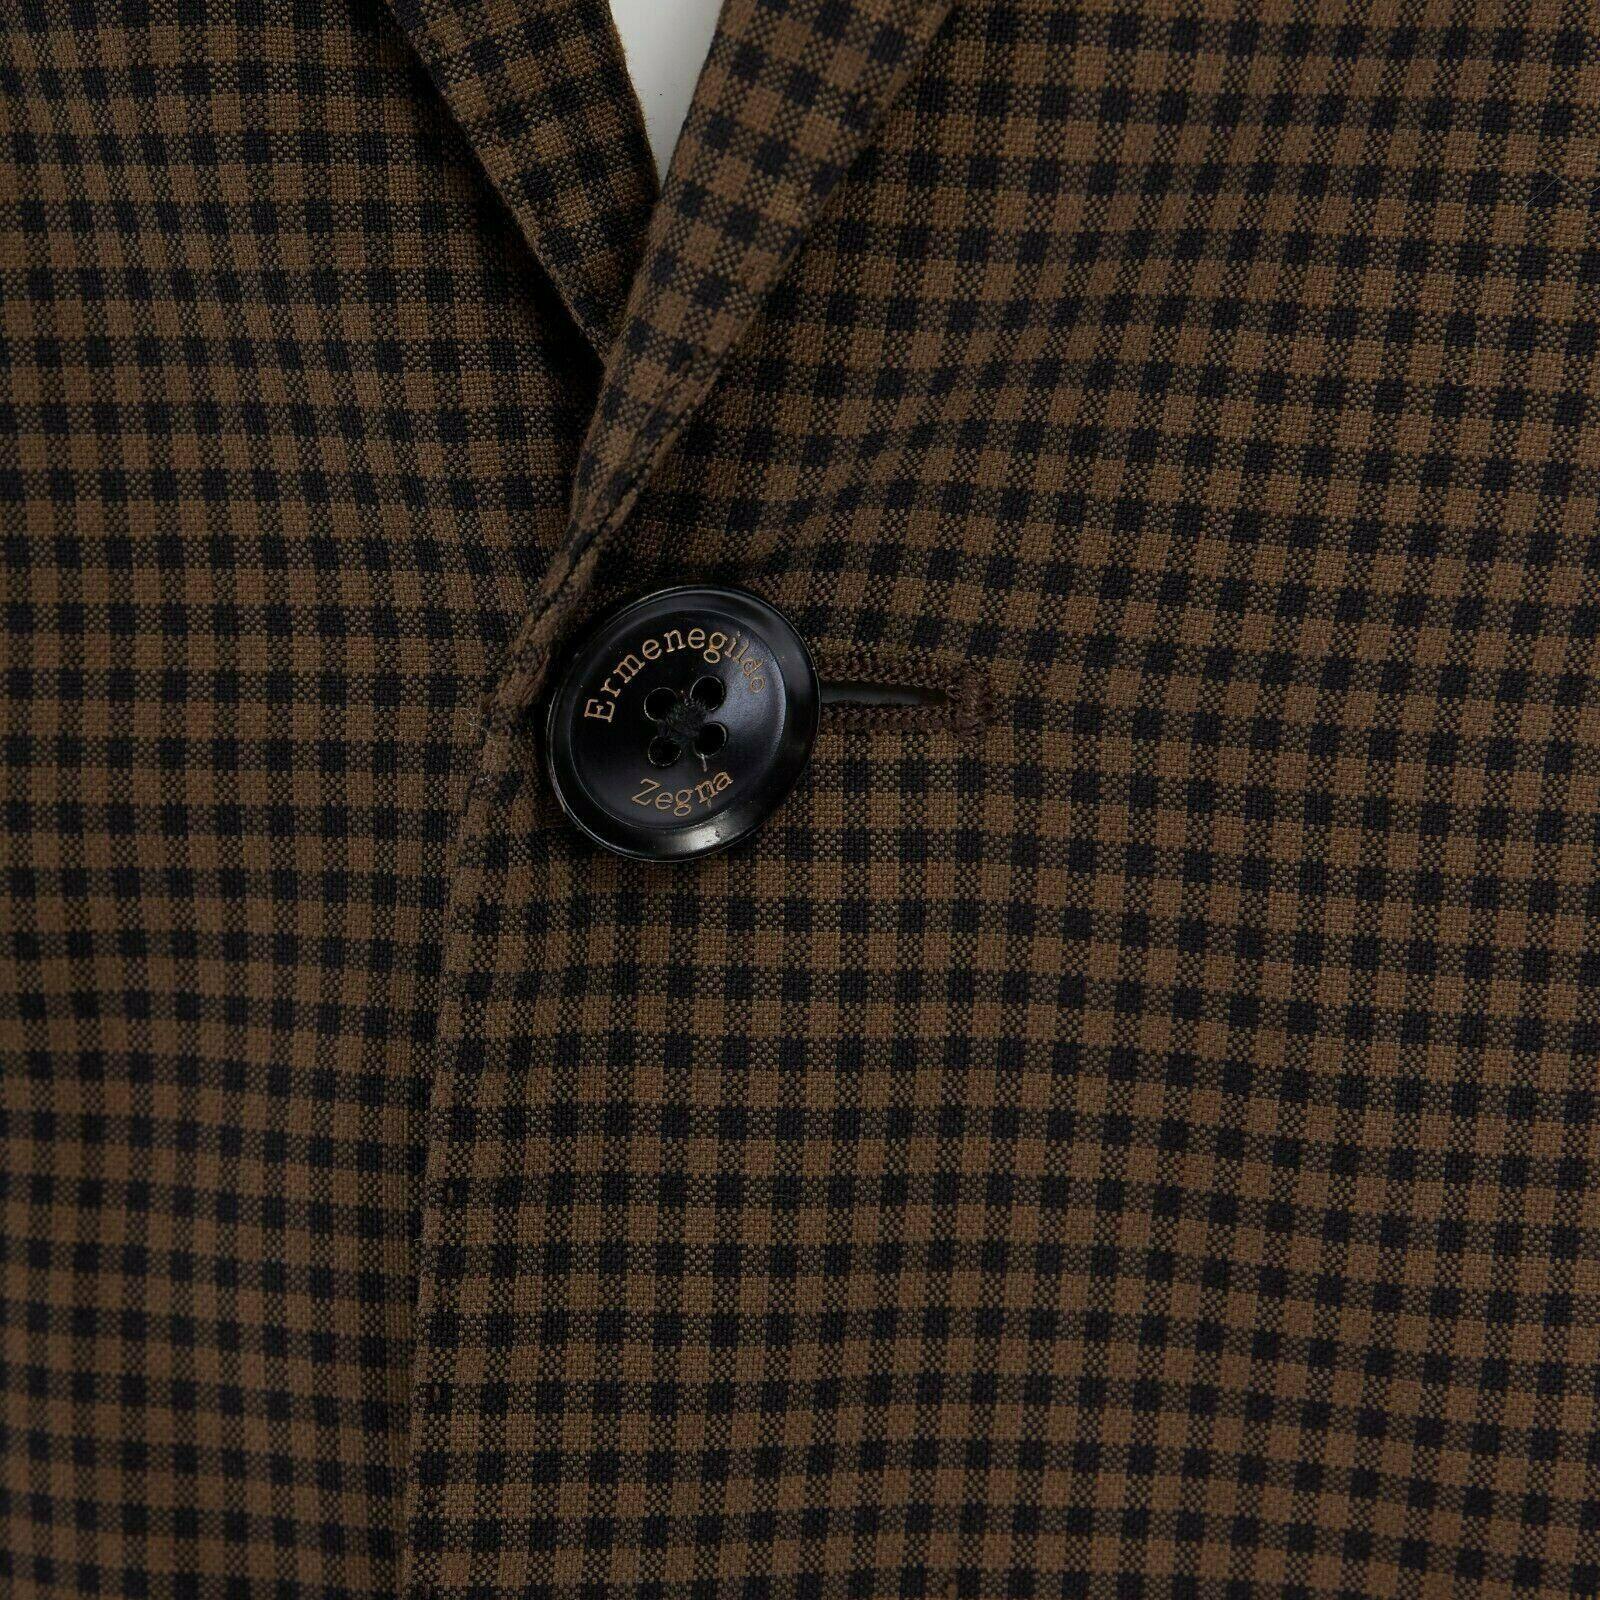 ERMENEGILDO ZEGNA brown black checked cotton wool blend blazer jacket EU50 L
Reference: LNKO/A00728
Brand: Ermenegildo Zegna
Material: Wool, Blend
Color: Brown
Pattern: Checkered
Closure: Button
Extra Details: Cotton, wool, silk blend. Brown and